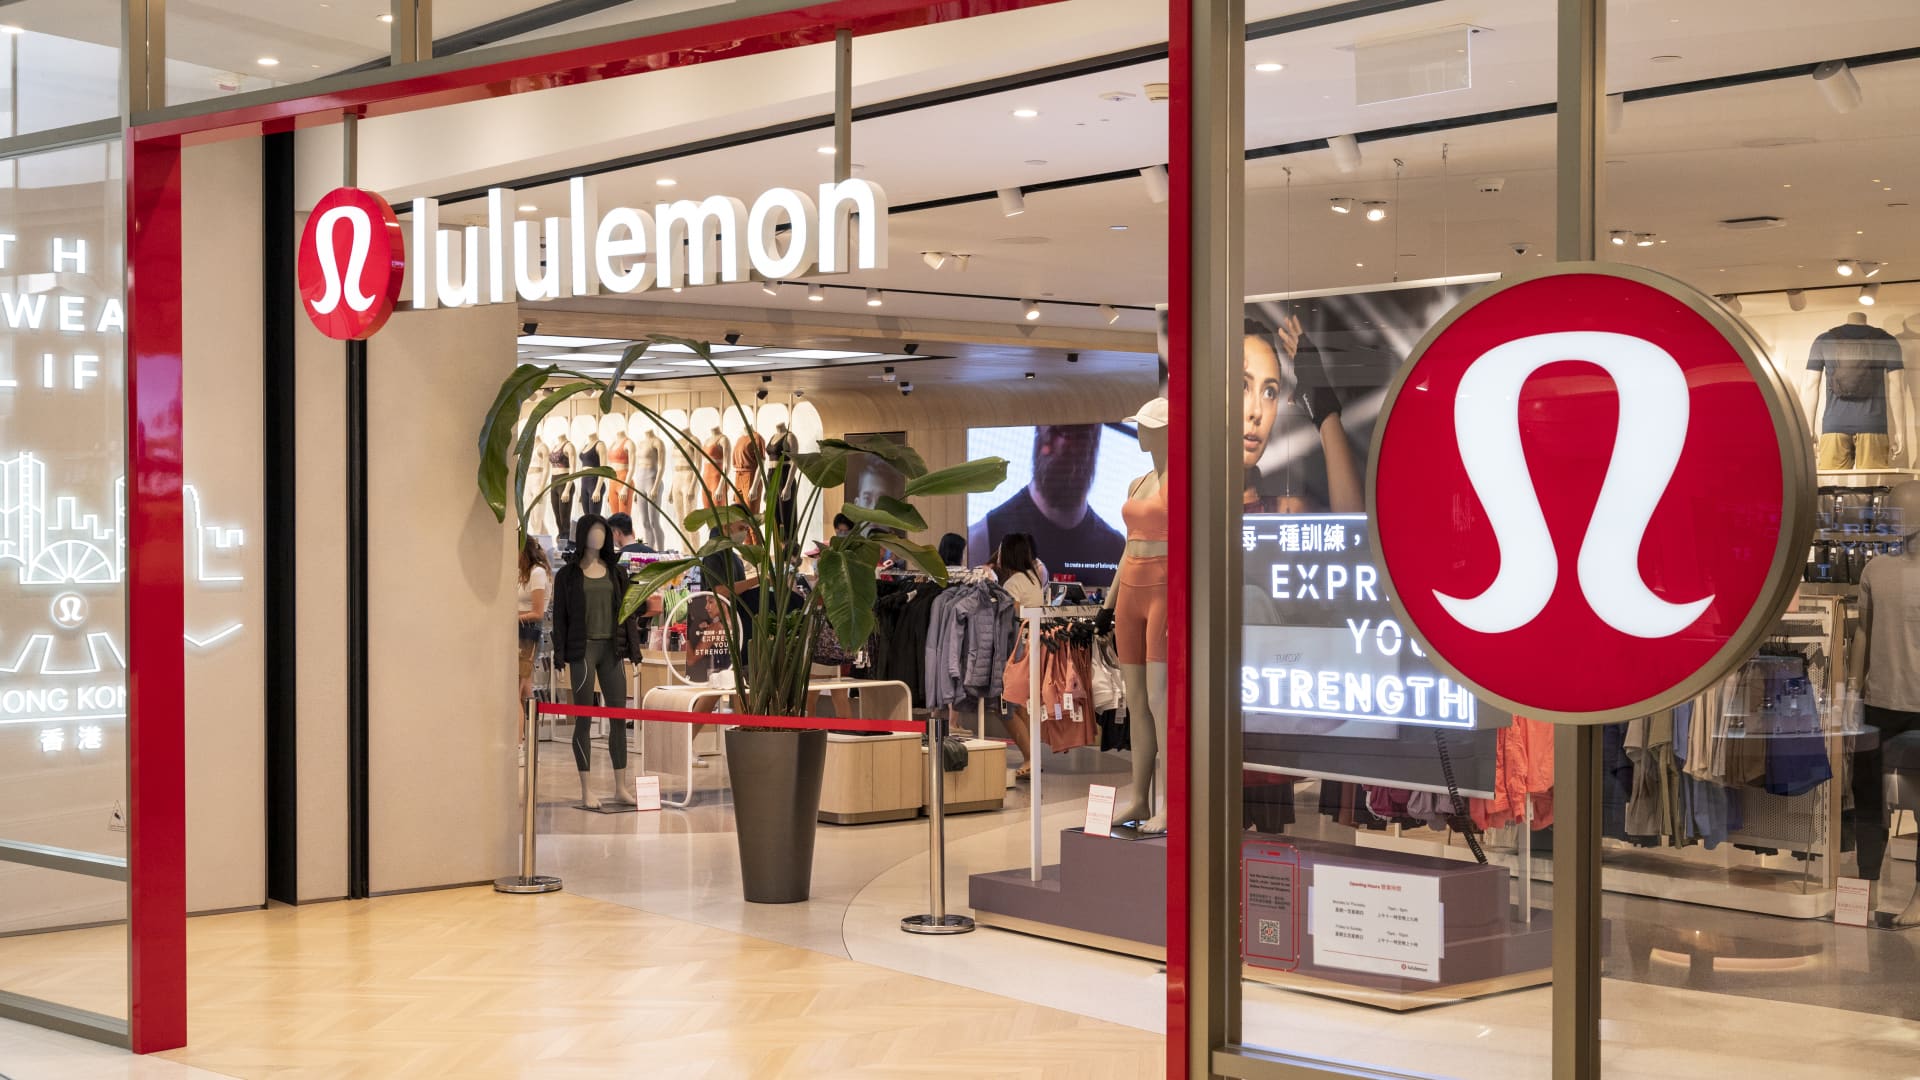 Lululemon to launch first men’s footwear line